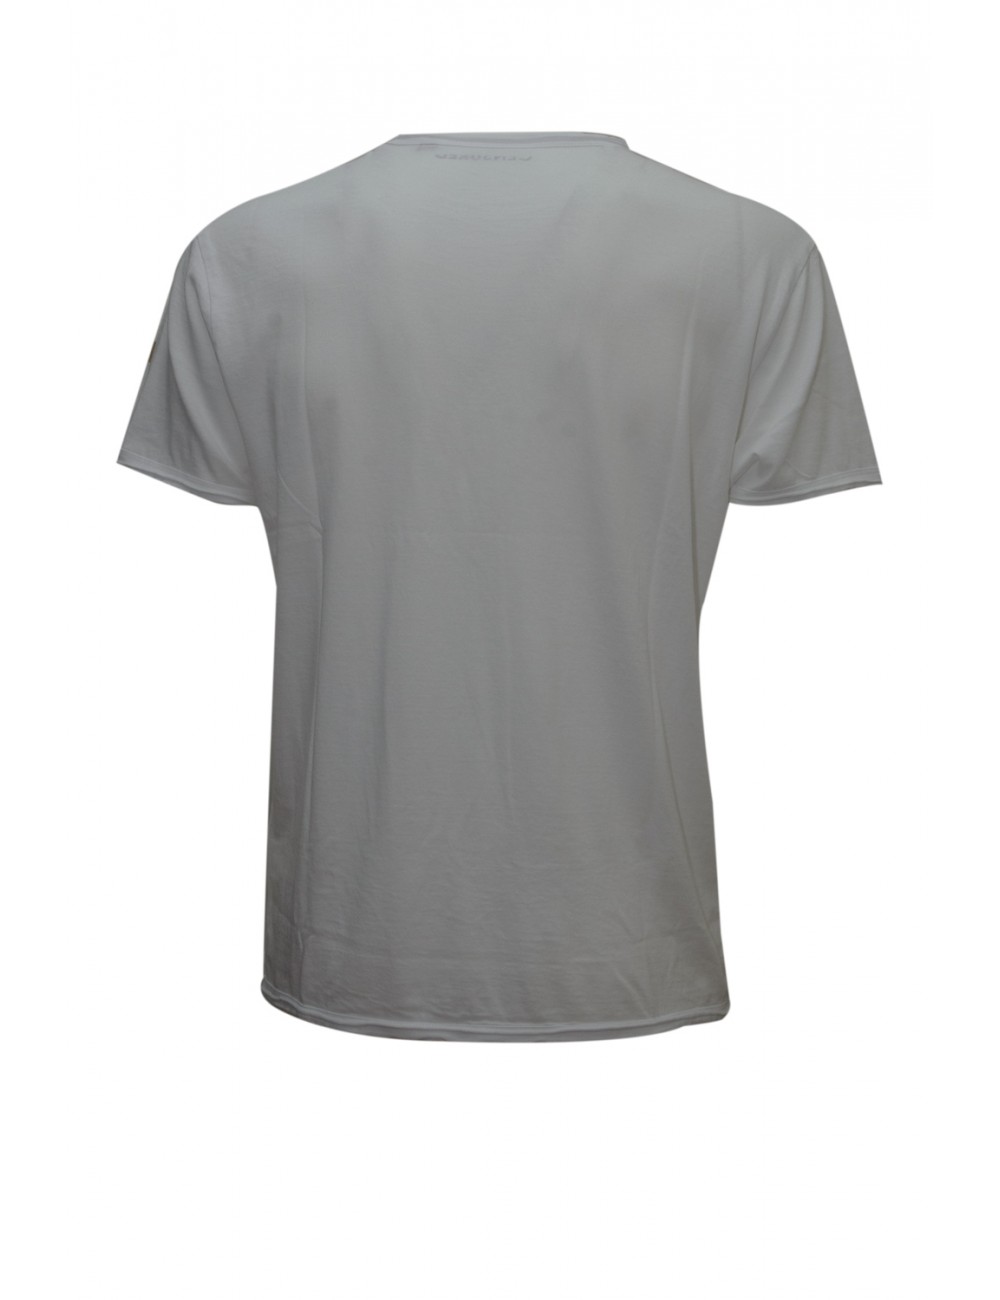 t-shirt censured UOMO BIANCA - TM 2400 T JSEP 00F vista frontale